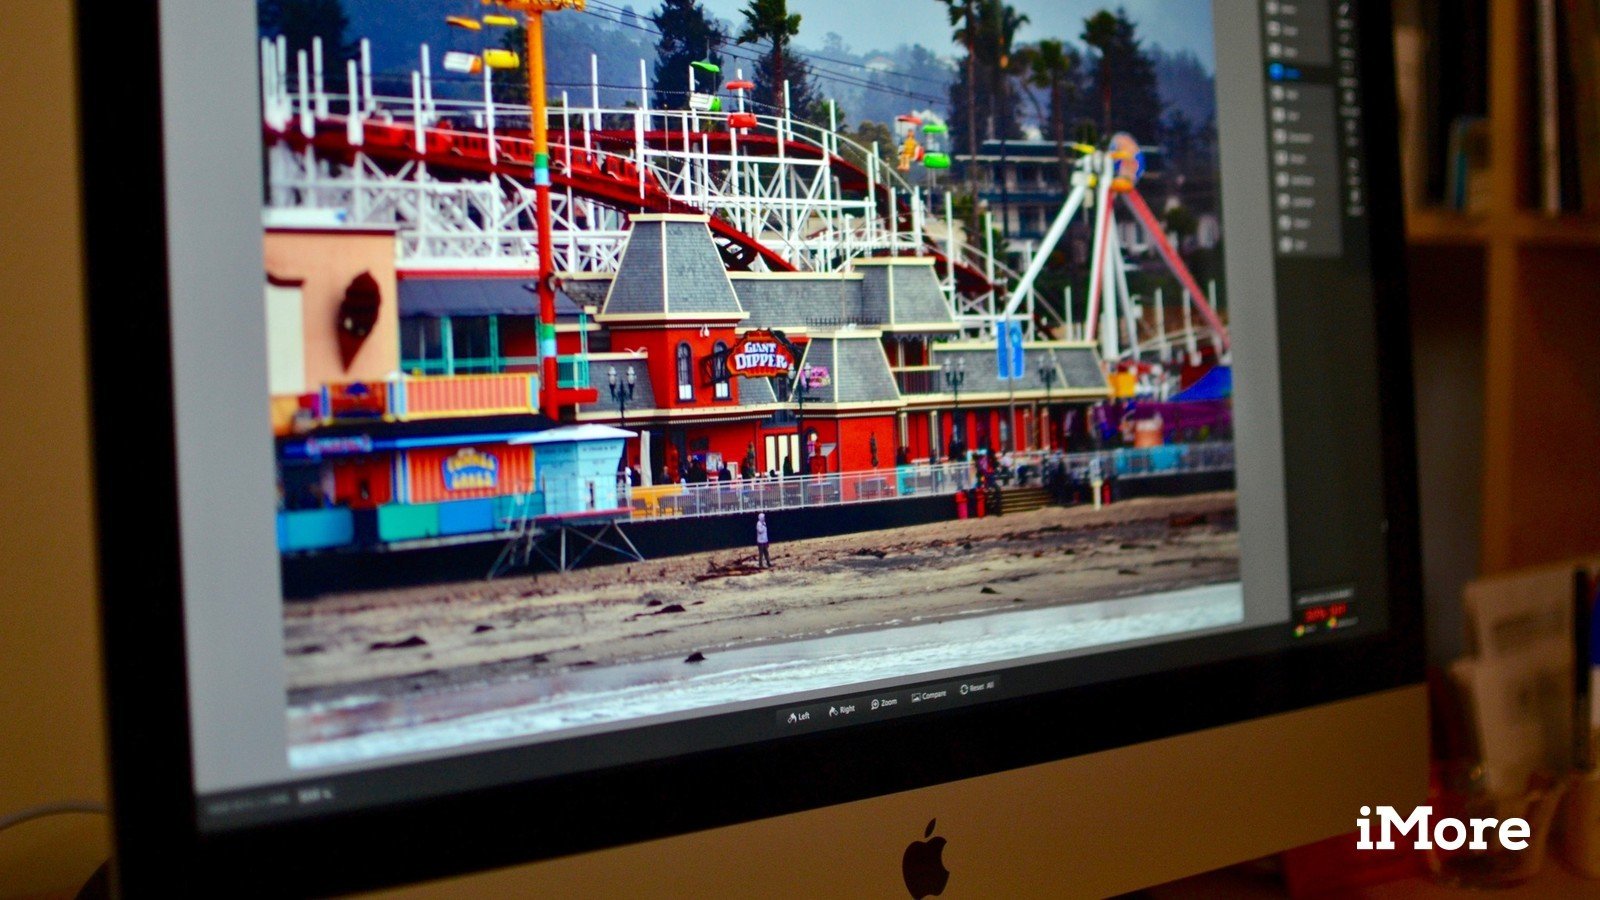 Adobe photoshop app for macbook